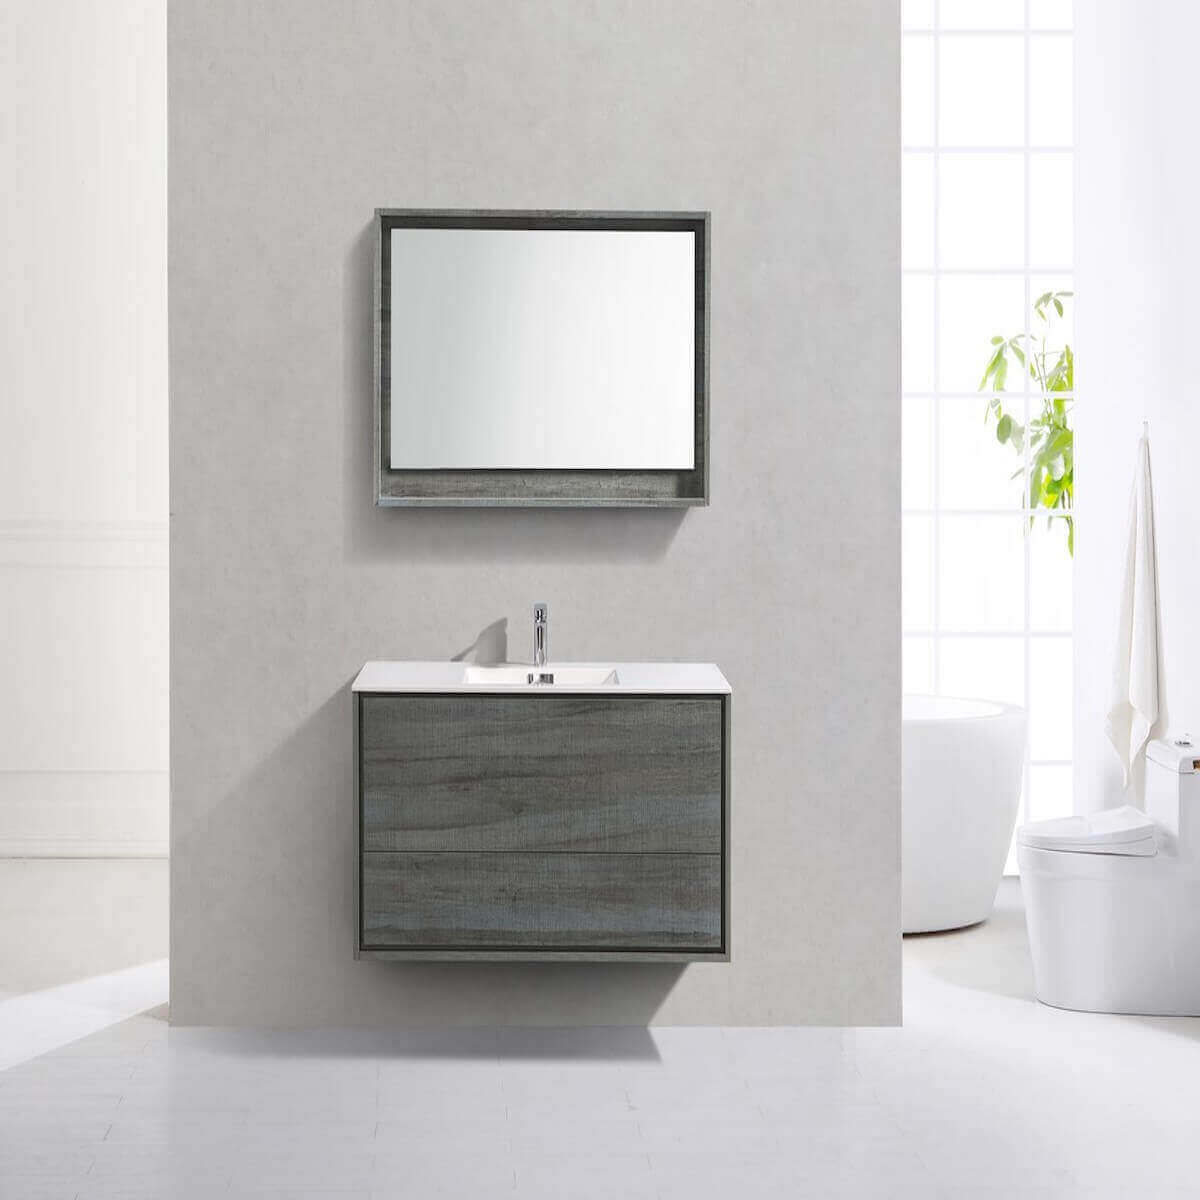 KubeBath DeLusso 48" Ocean Gray Wall Mount Single Vanity DL48S-BE in Bathroom #finish_ocean gray